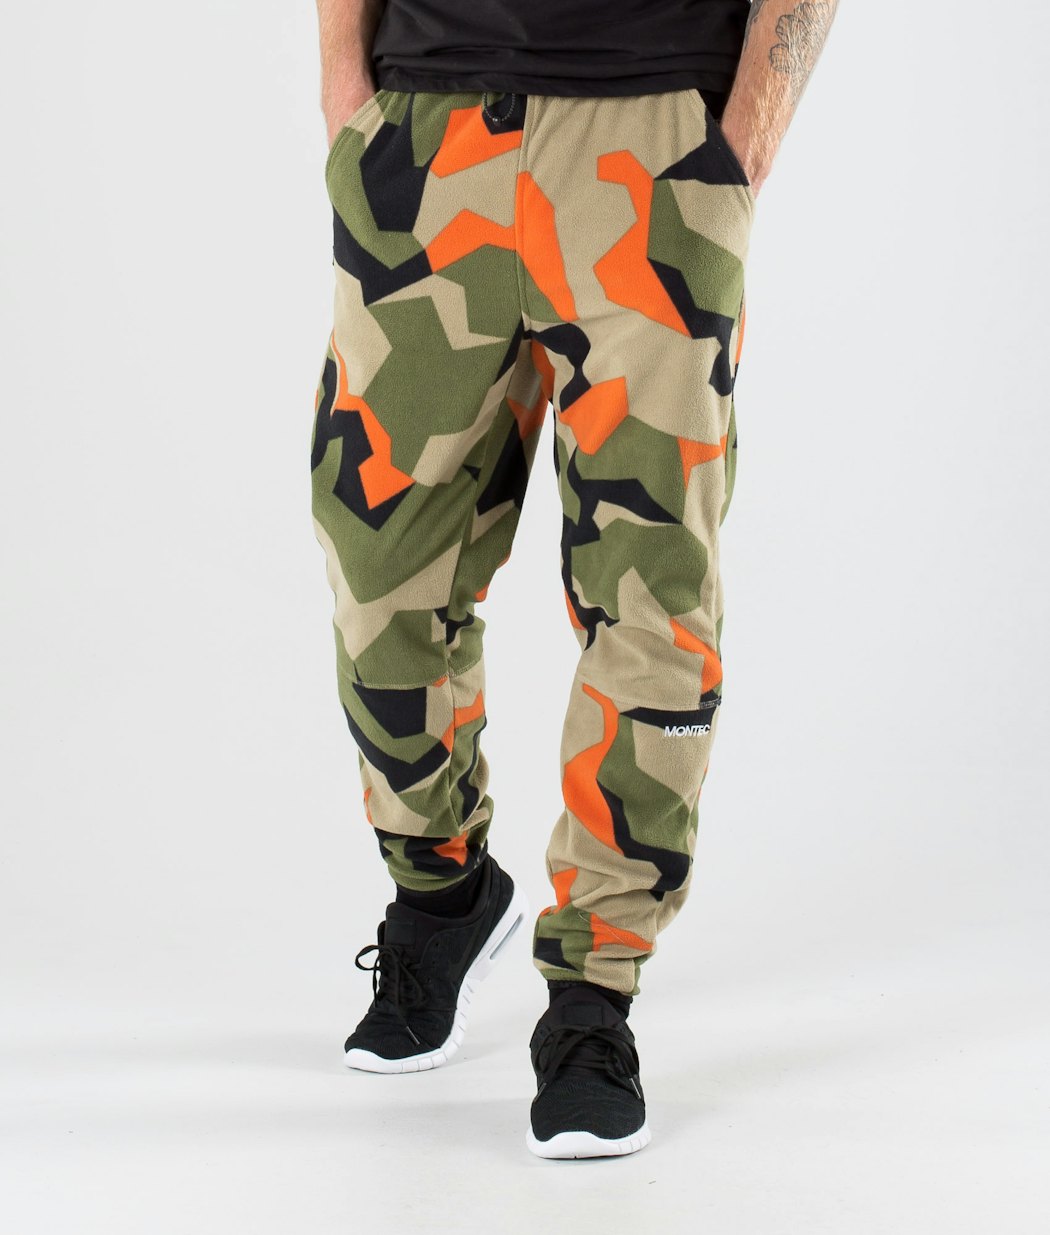 Montec Echo Fleece Pants Men Green Orange Camo | Montecwear AU